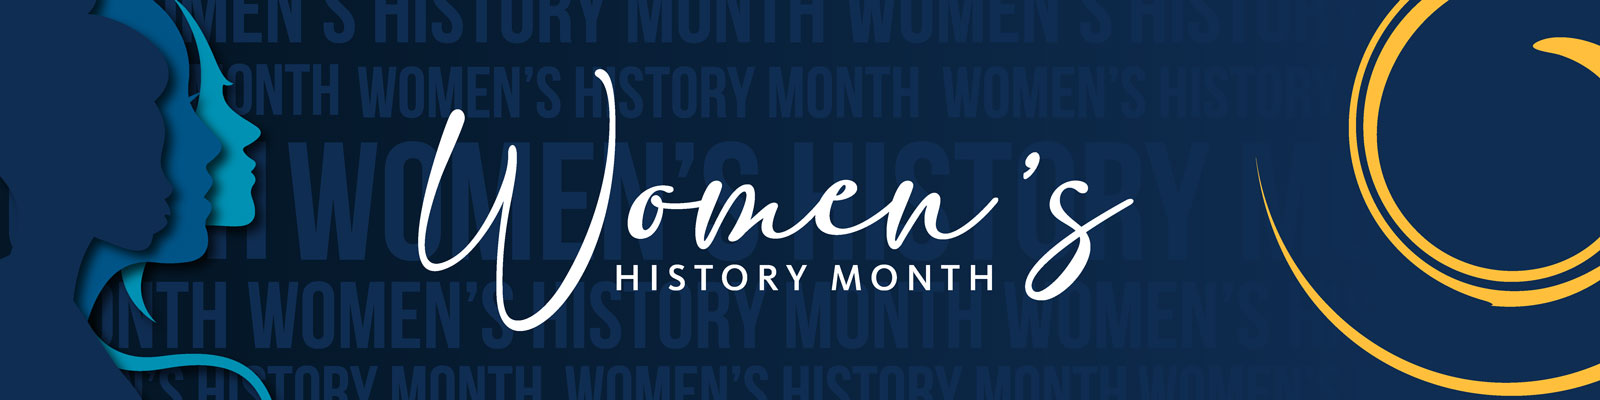 Celebrating Womans History and Accomplishments